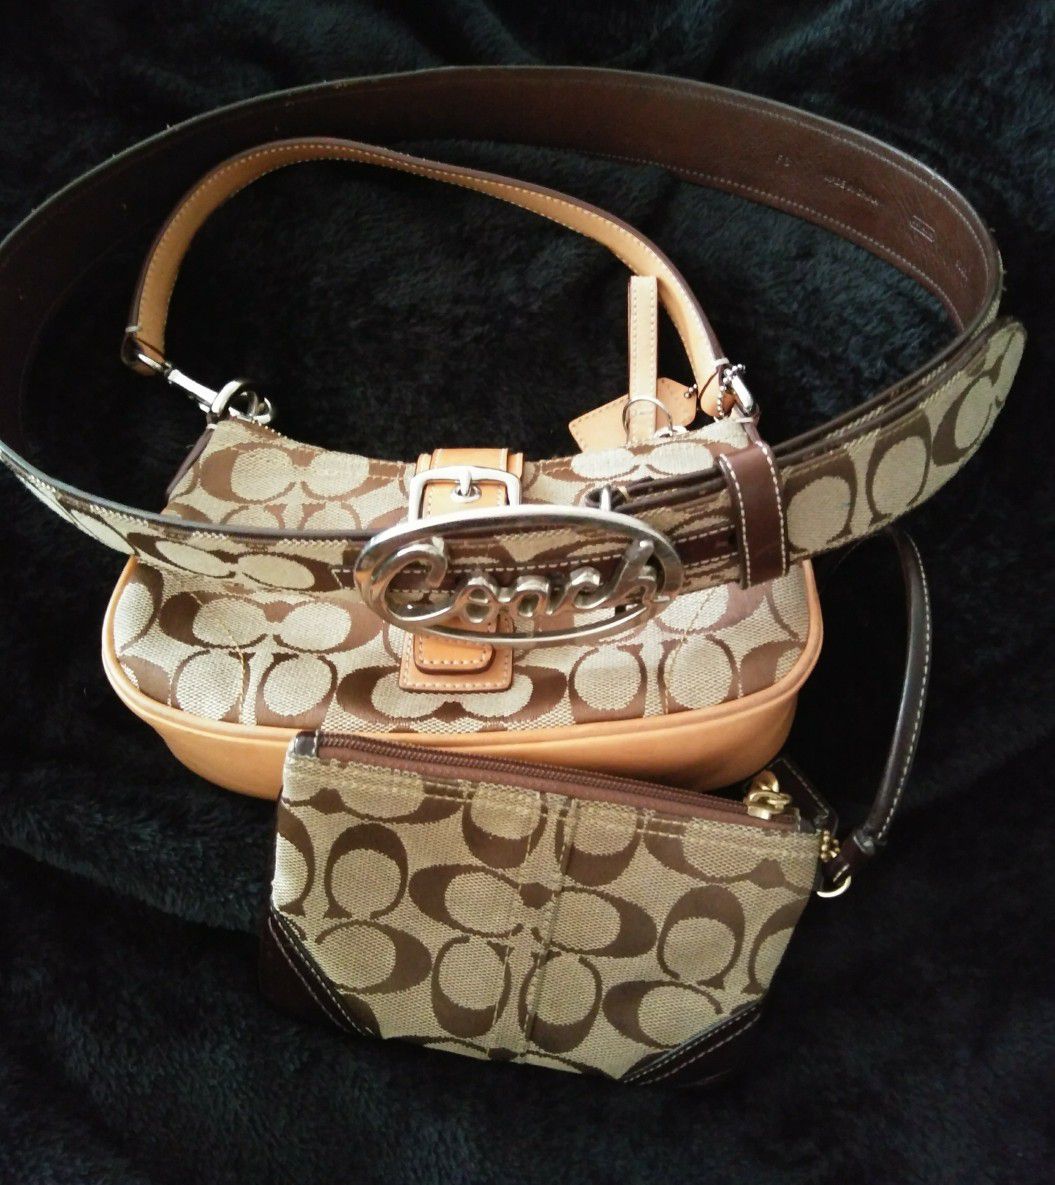 Authentic Coach purse, wallet and belt